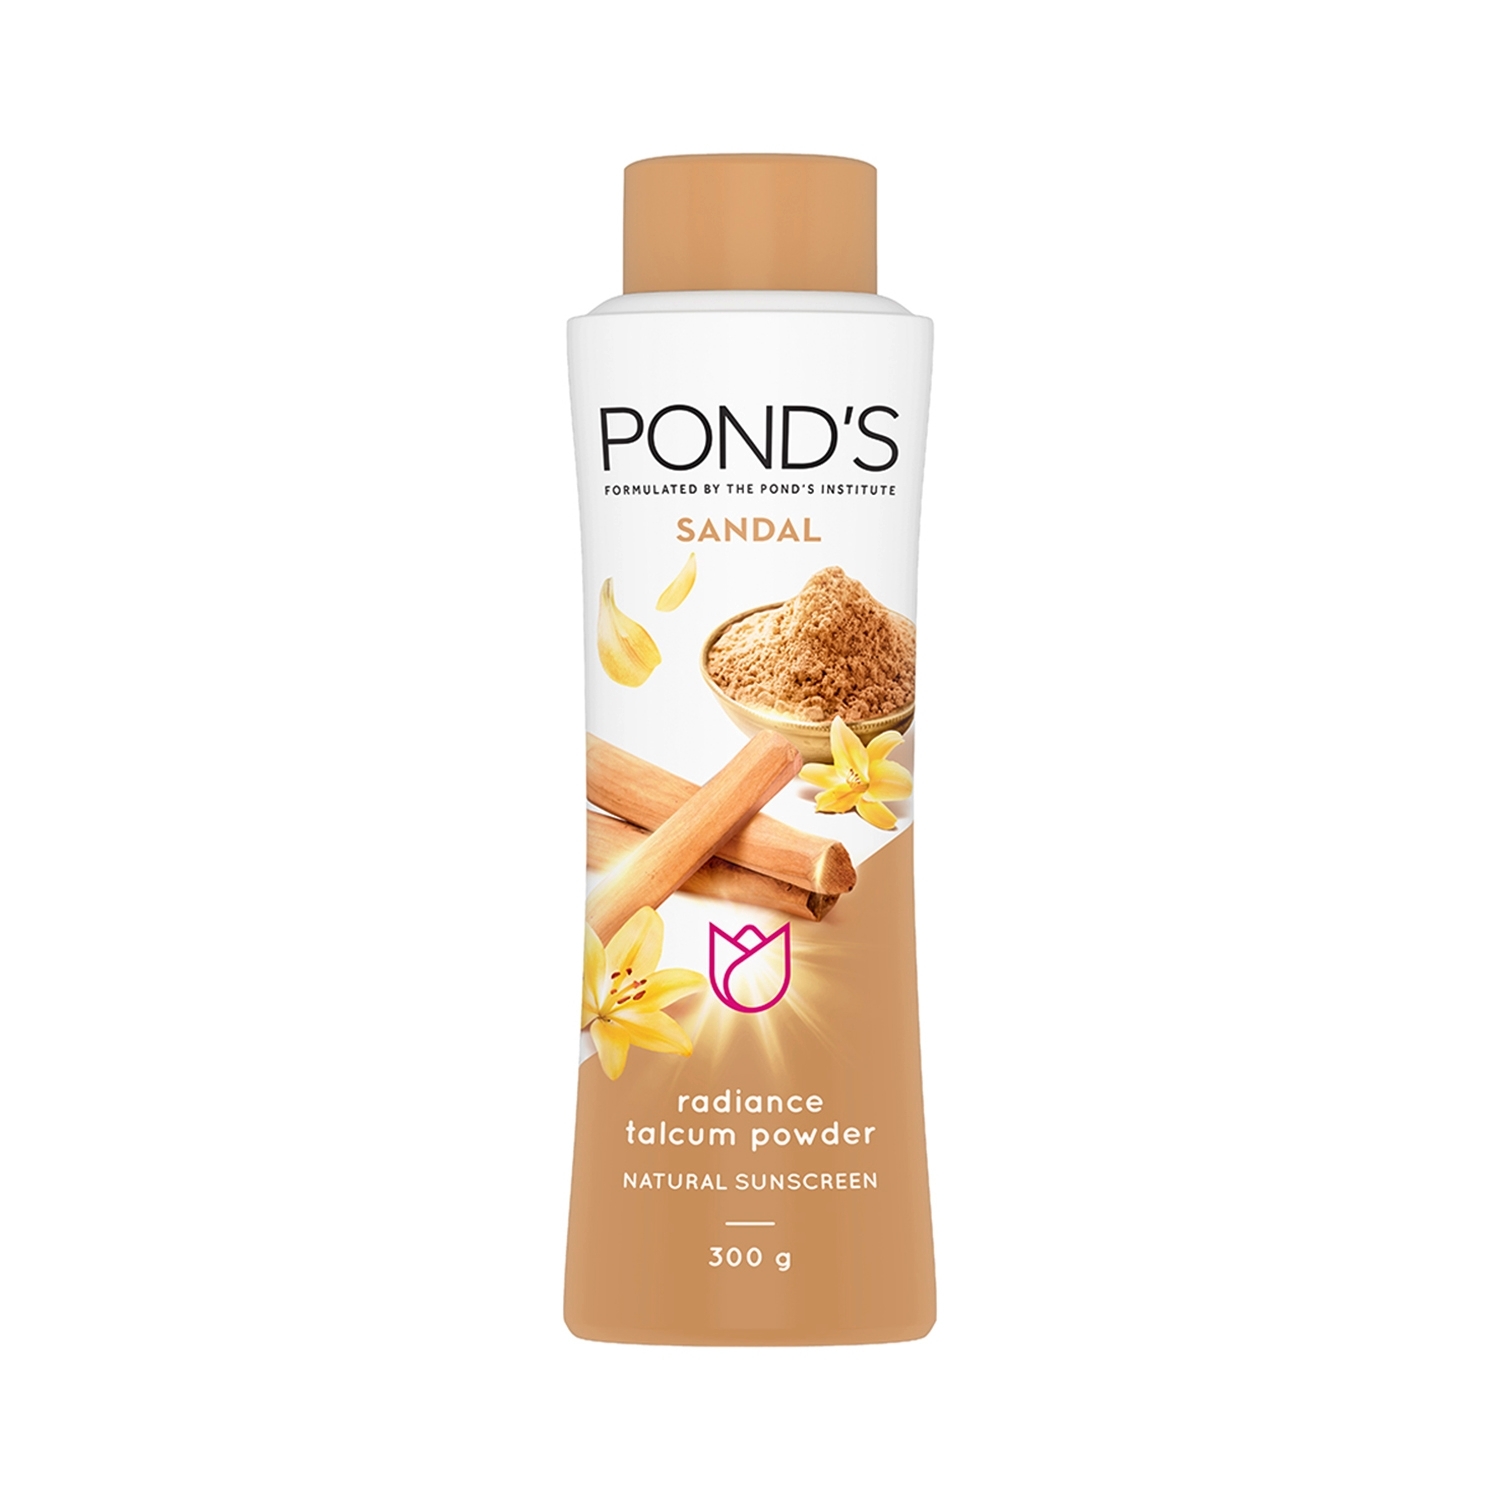 Pond's Sandal Radiance Talcum Powder Natural Sunscreen - (300g)